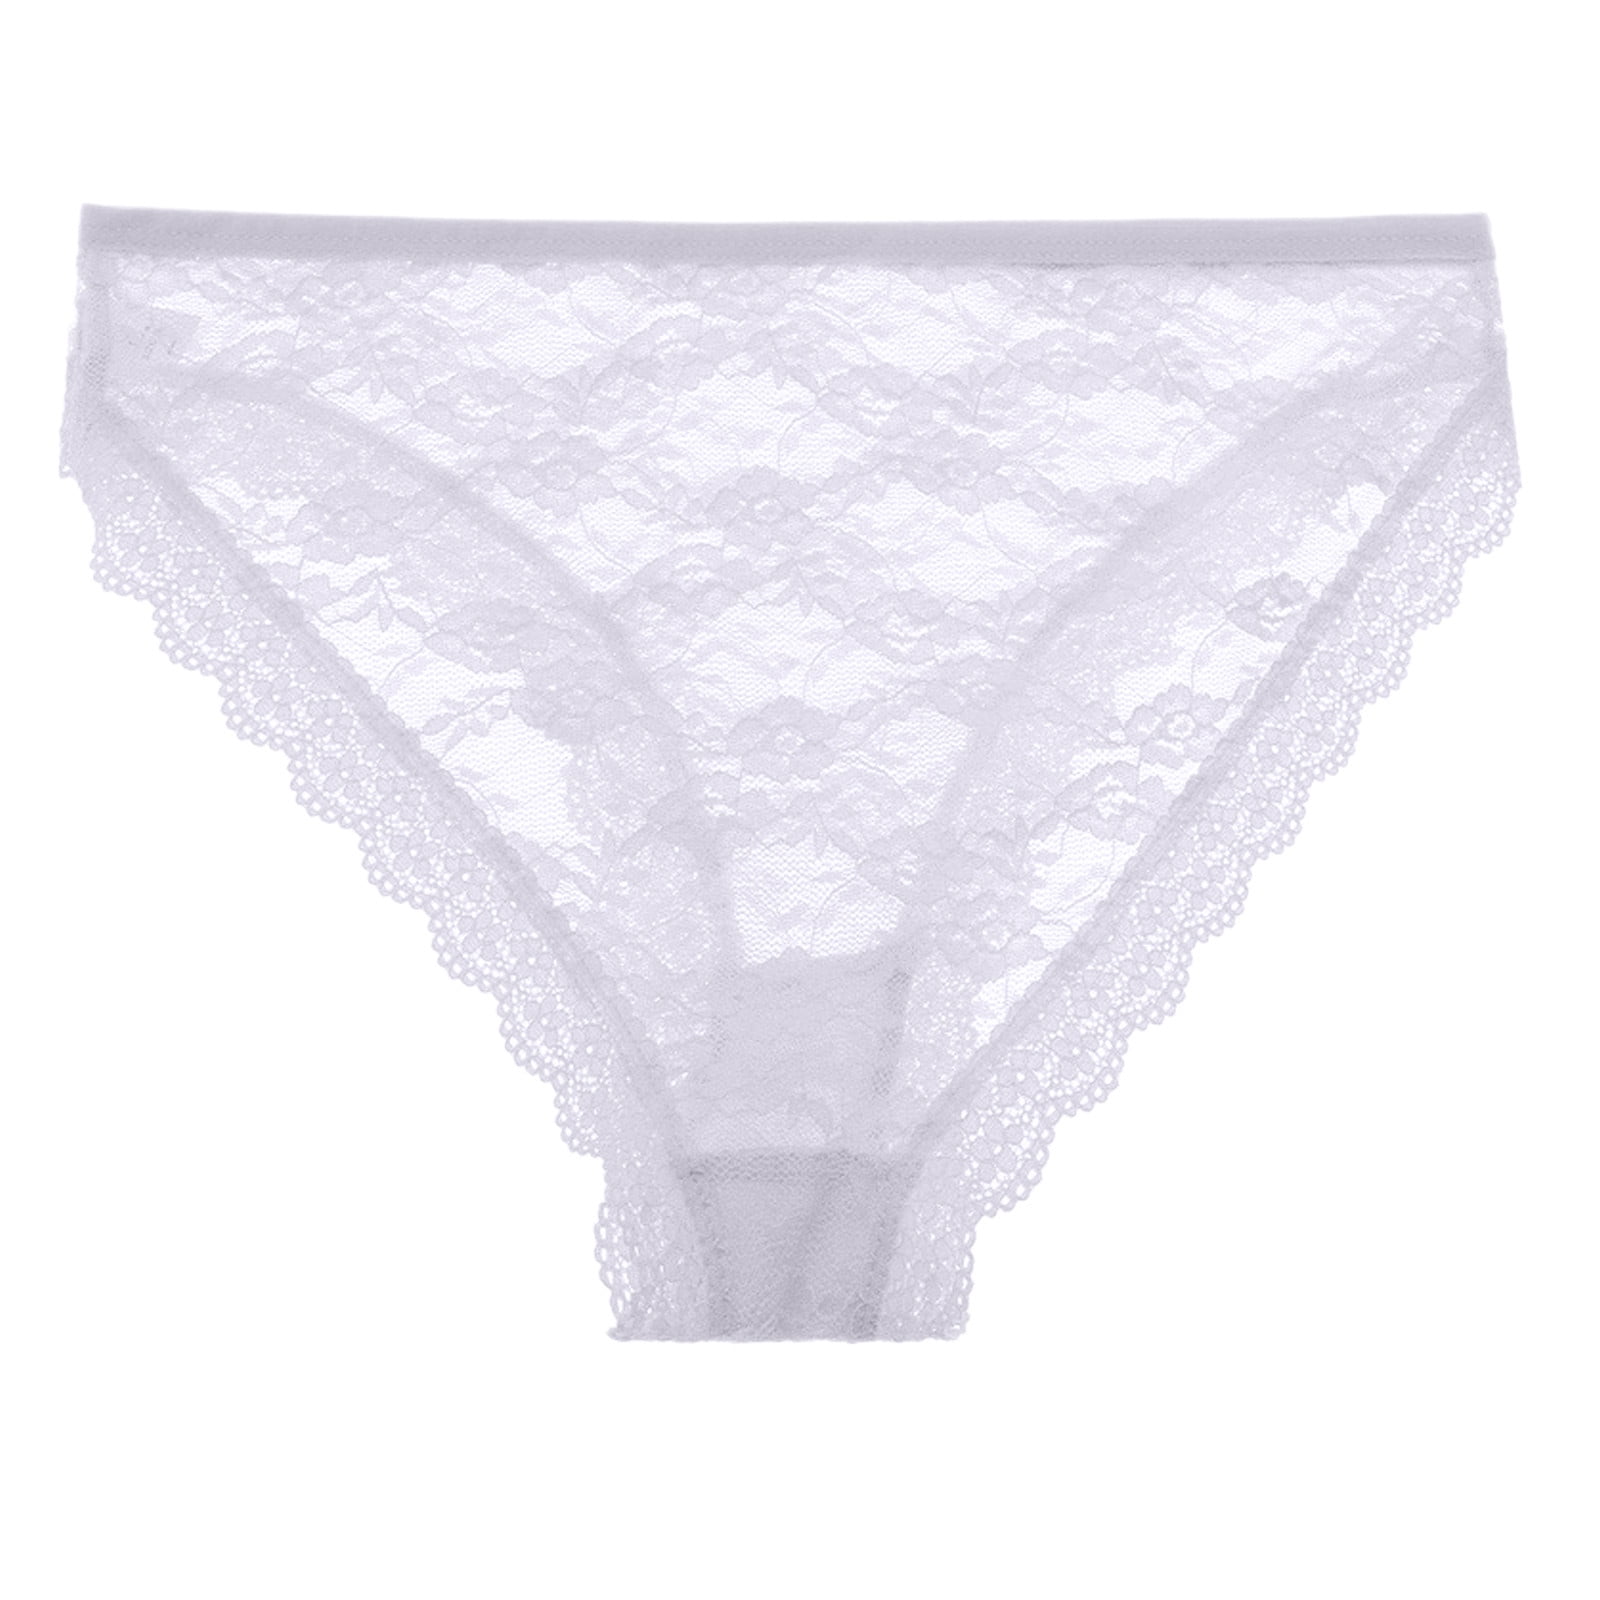 Eashery Lingery for Women Women's Body Caress Flexible Fit Panties White  XX-Large 